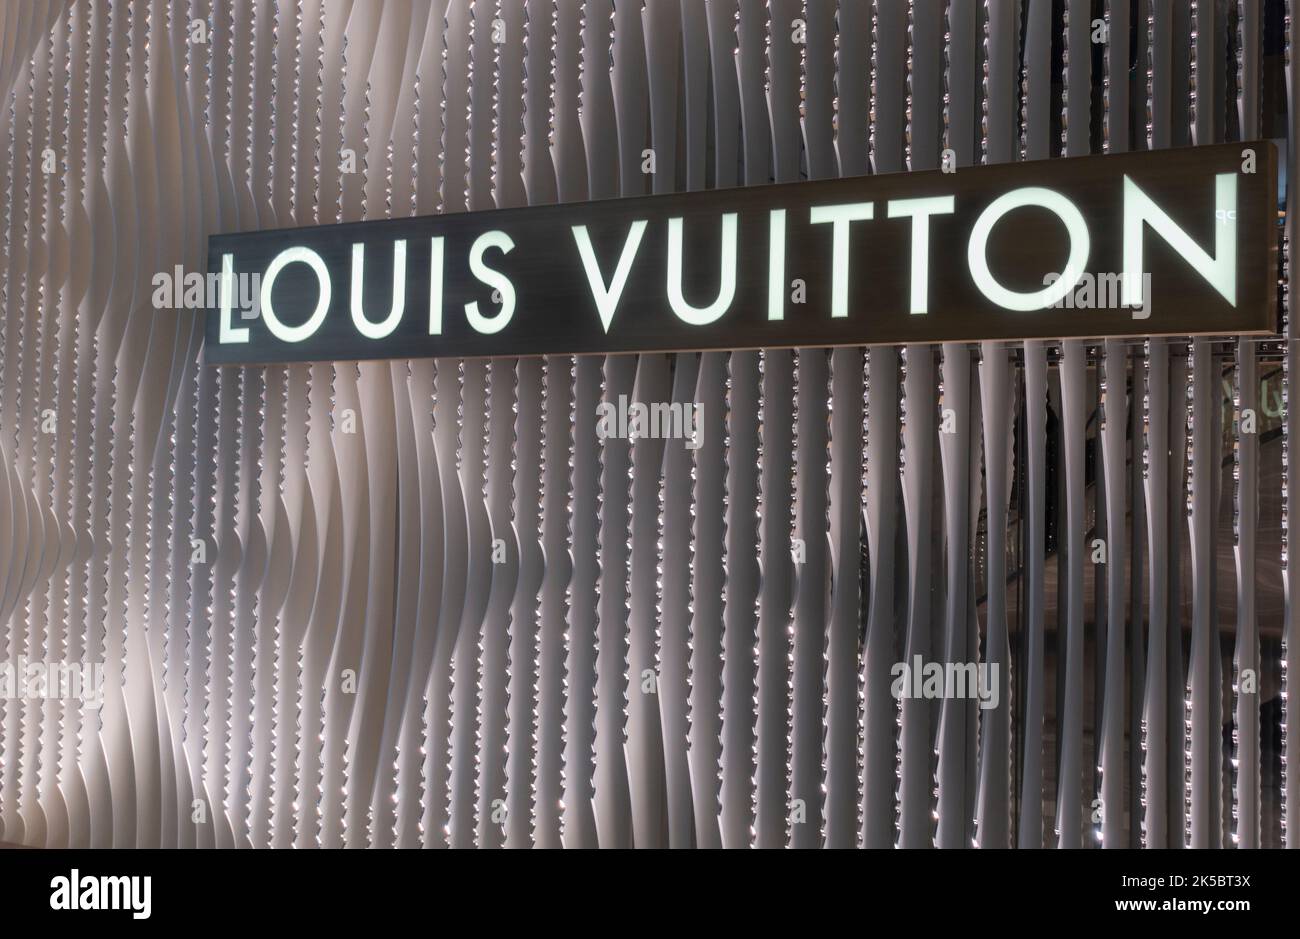 File:Louis Vuitton New York store (7181844454).jpg - Wikimedia Commons